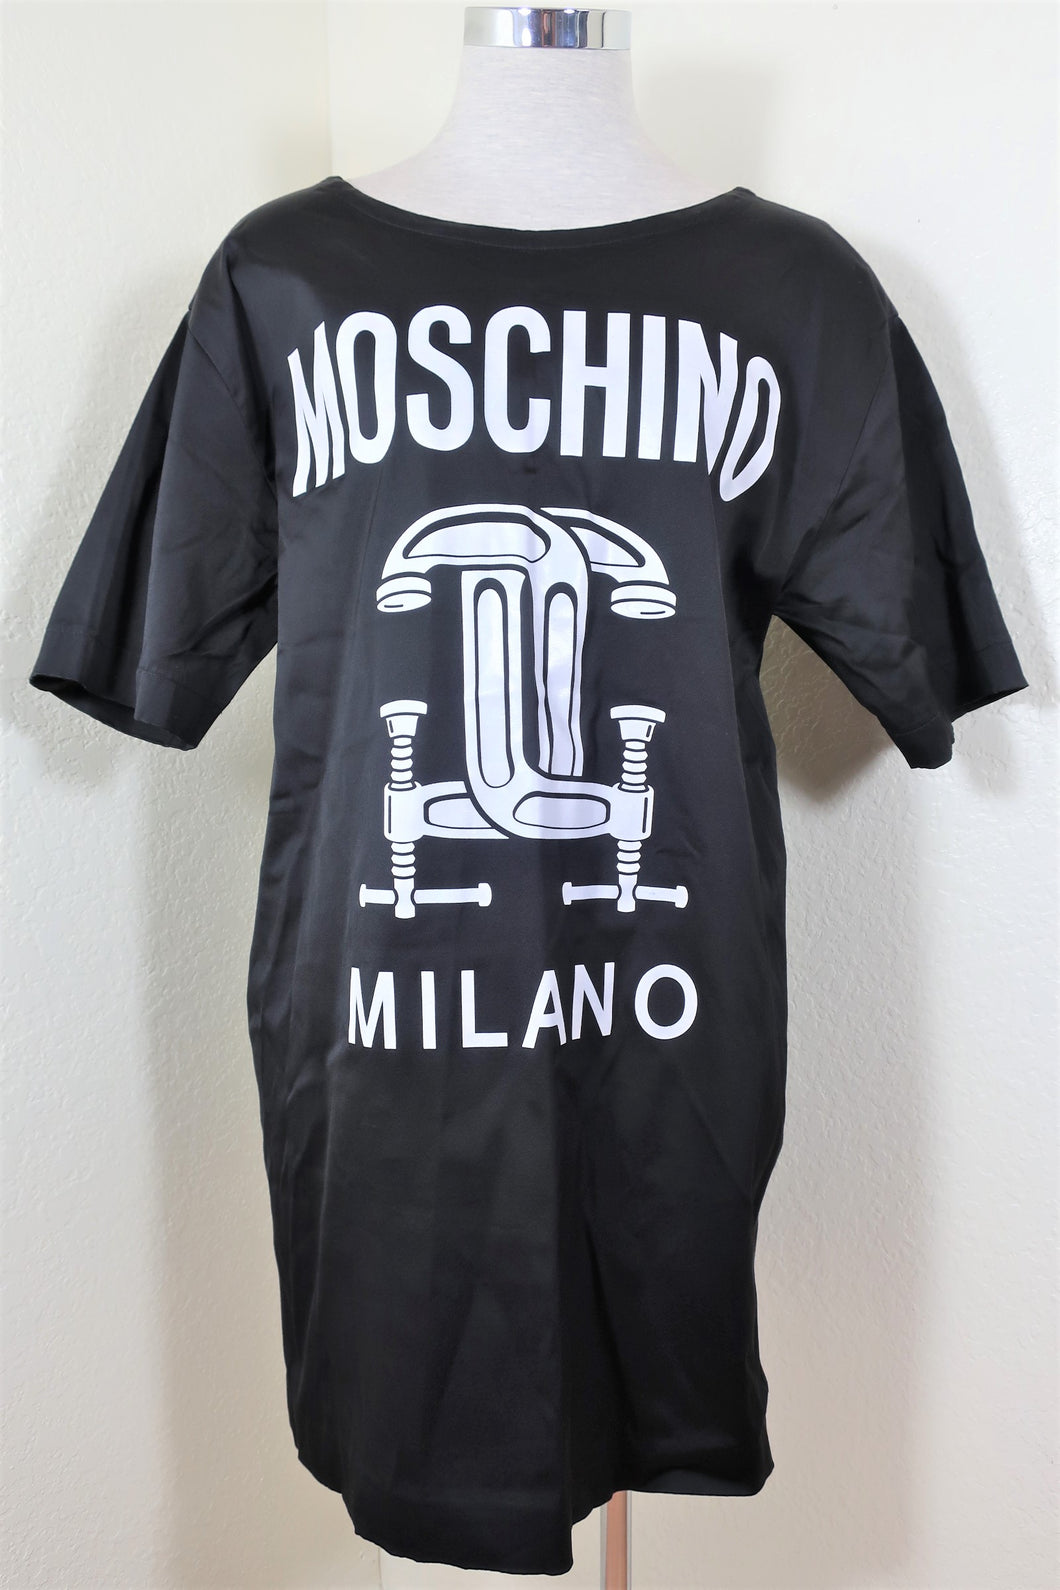 MOSCHINO COUTURE Milano BLack White Cotton Shirt Dress S M 38 40 4 5 6